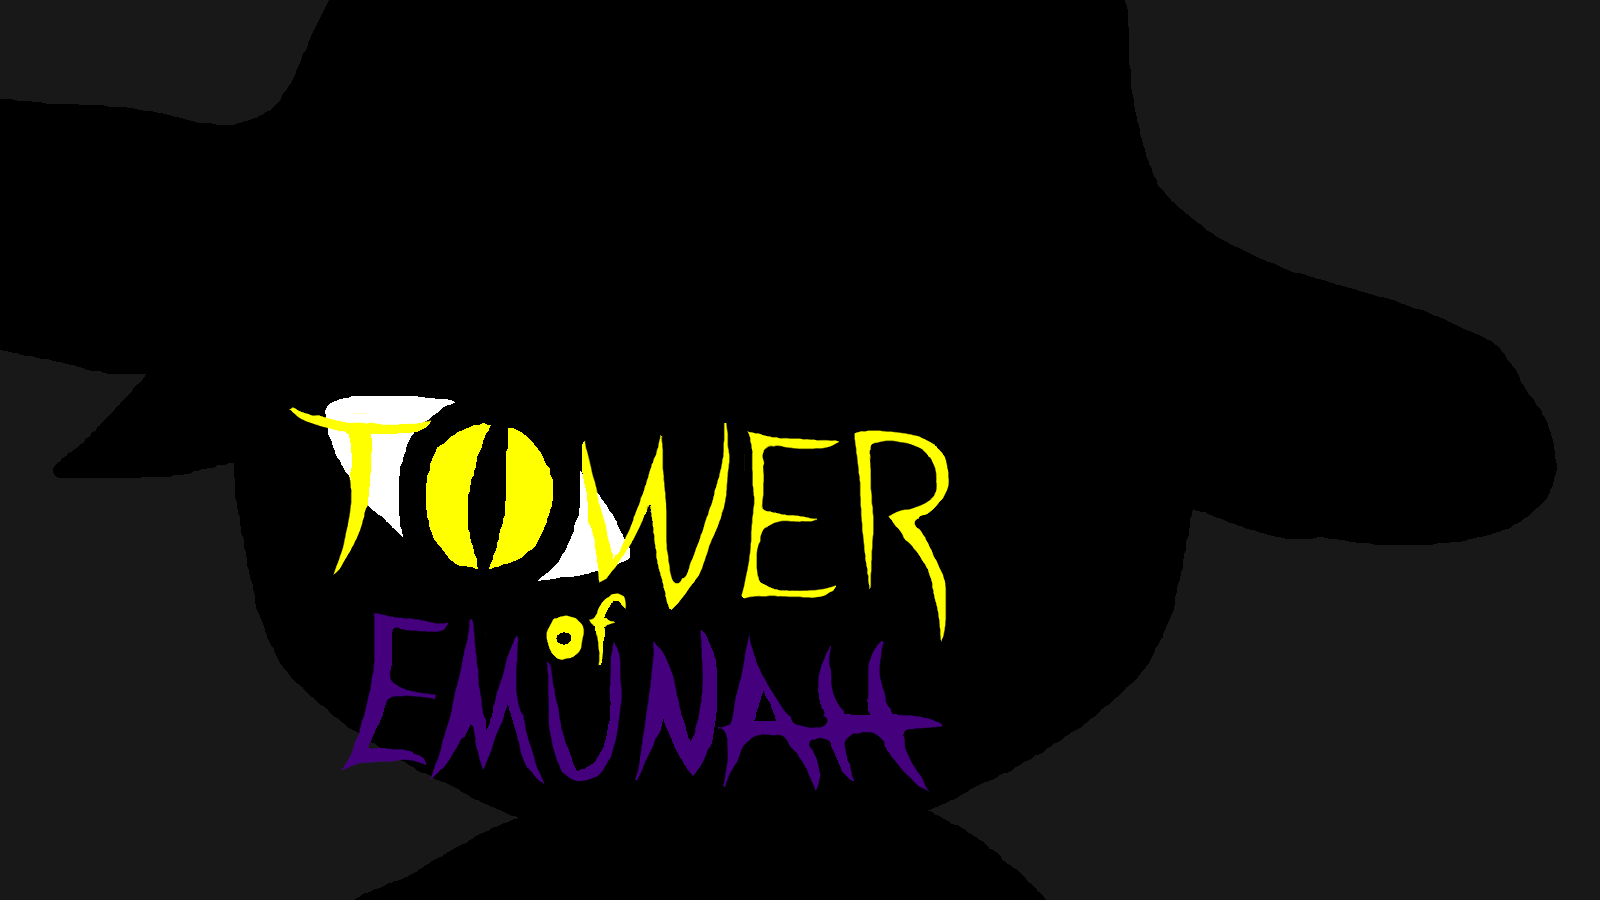 Tower of Emunah